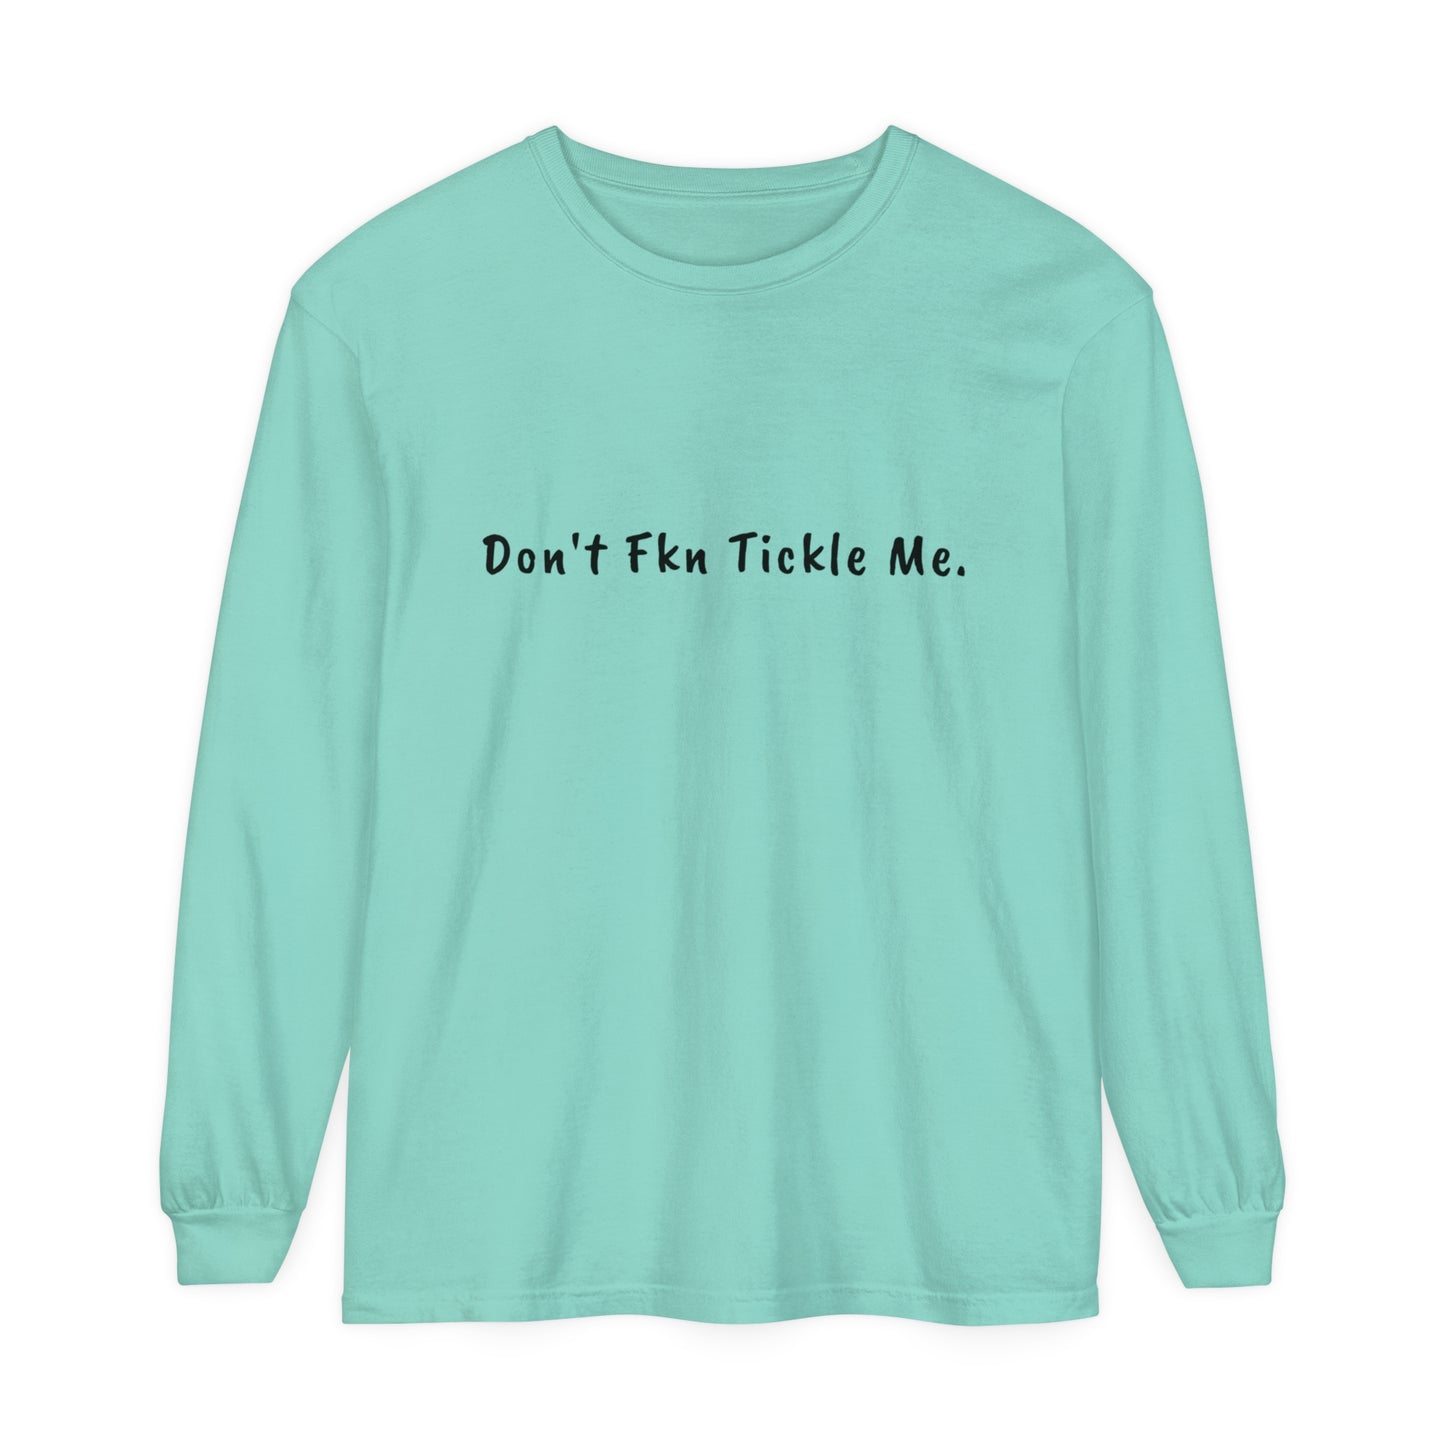 Don't Fkn Tickle Me - Unisex Long Sleeve Tee